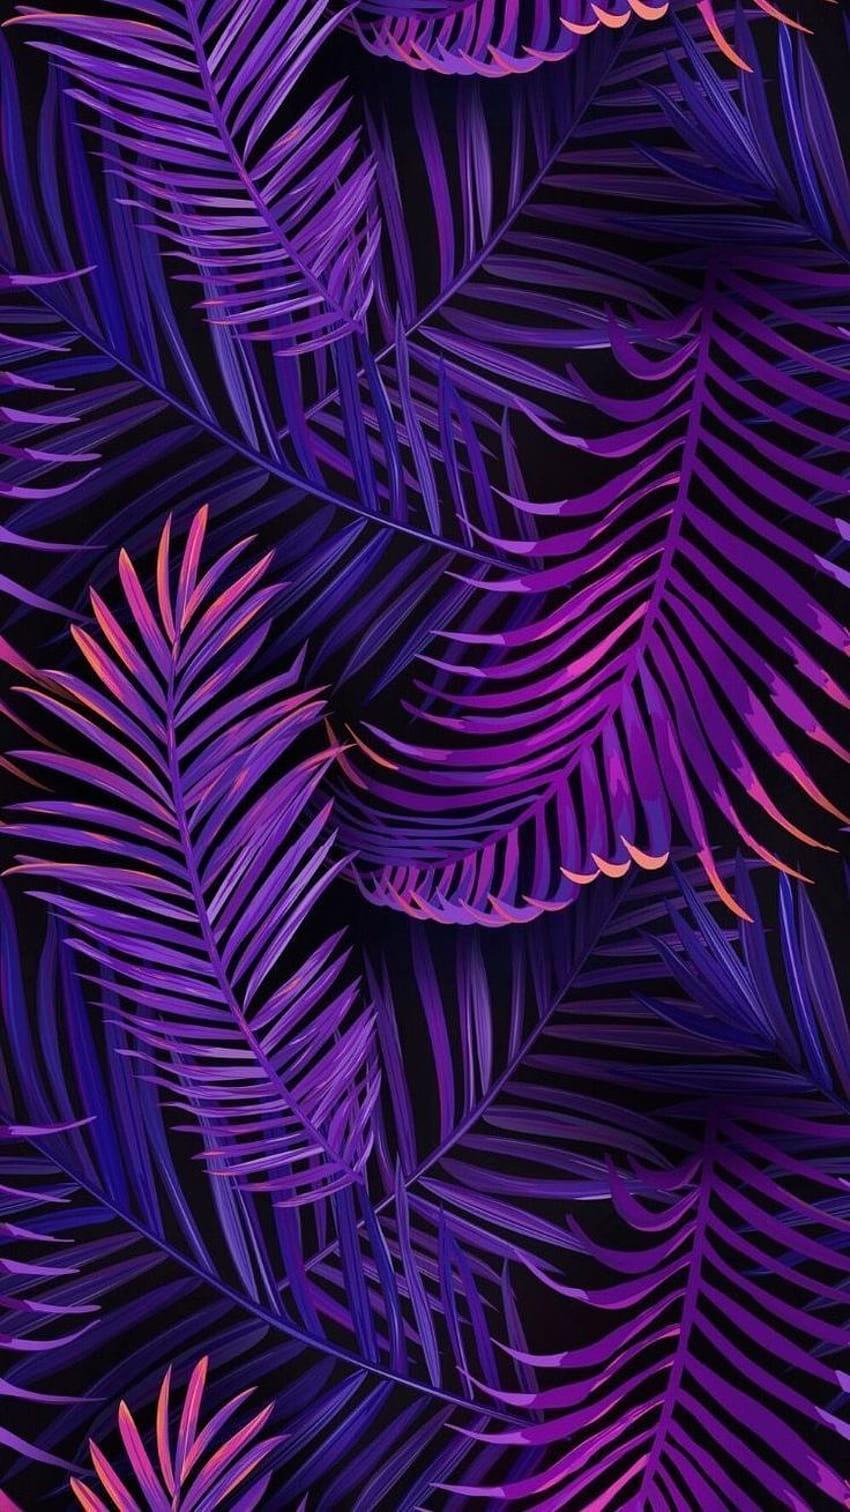 Brittany Campbell di layar, pola & cetakan iPhone/iPad, estetika ungu brittany wallpaper ponsel HD